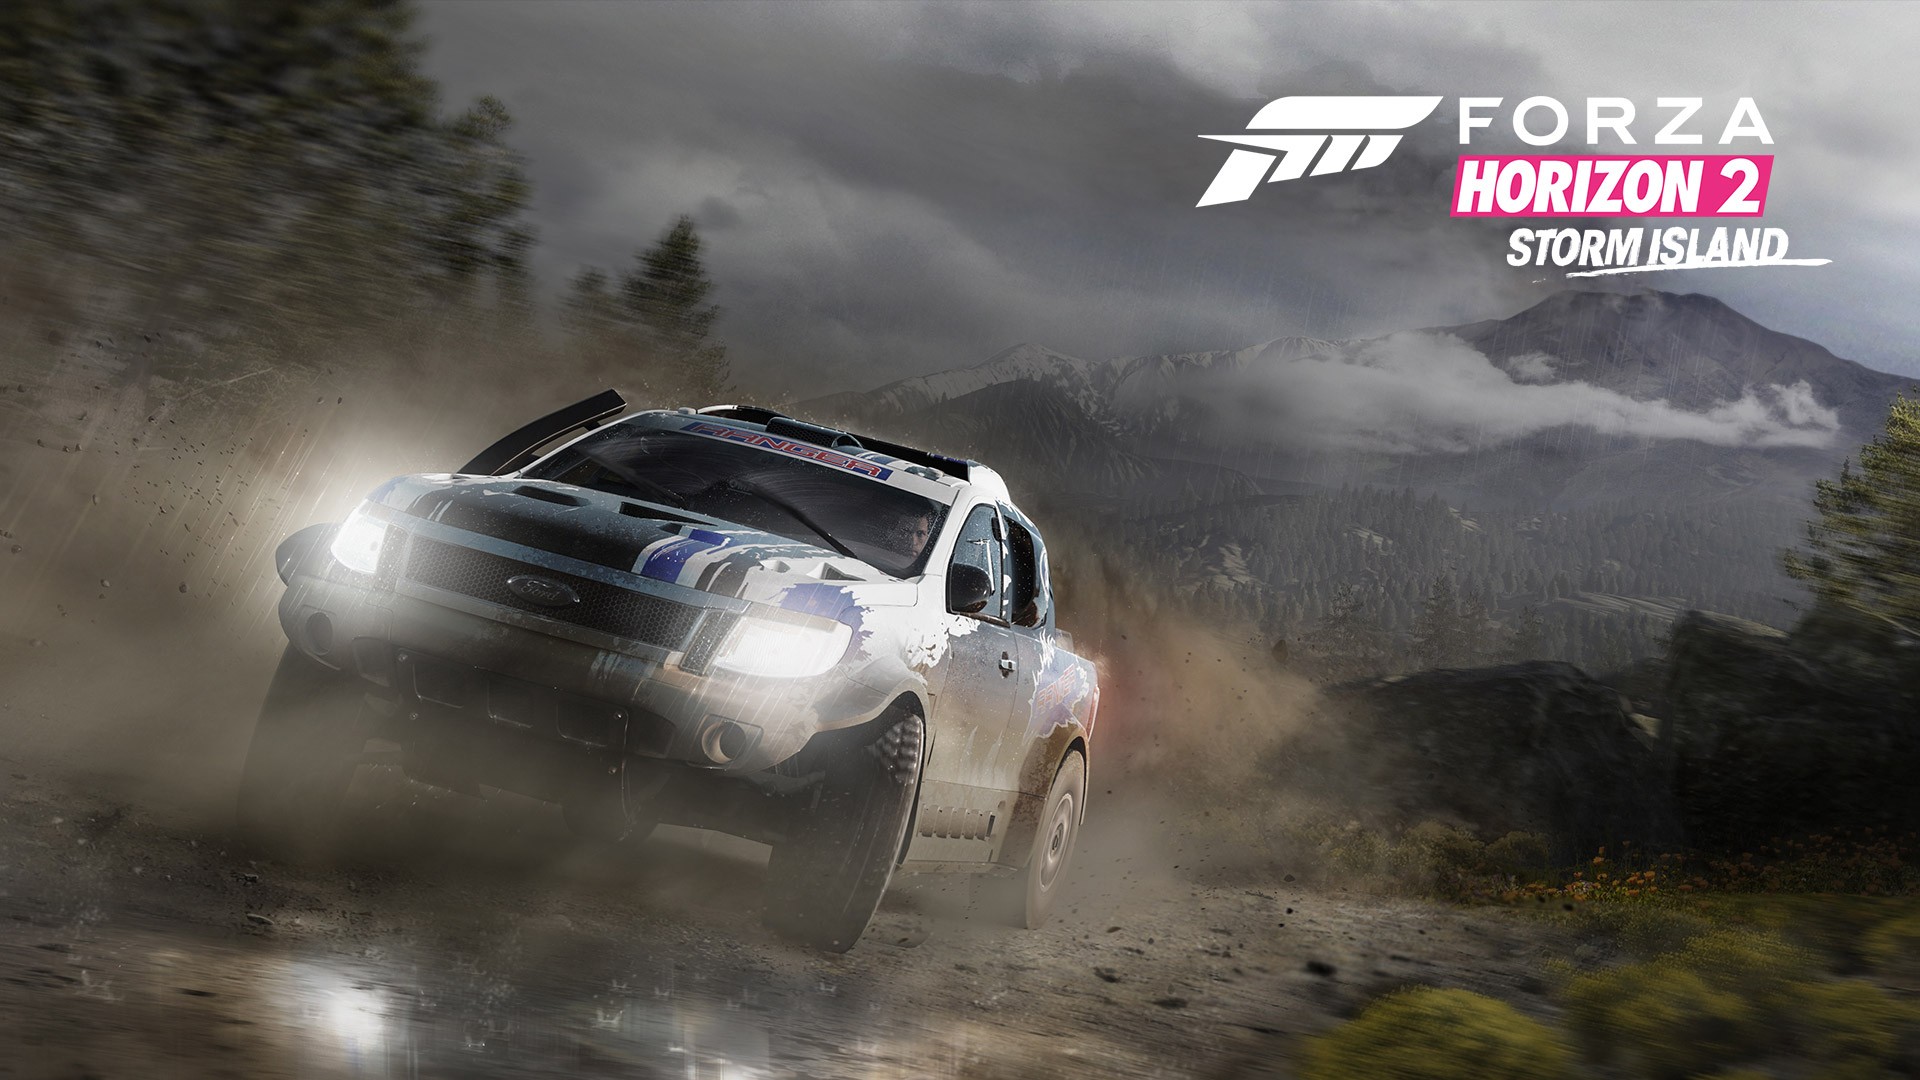 General 1920x1080 video games racing Forza Horizon 2 car Turn 10 Studios Ford vehicle